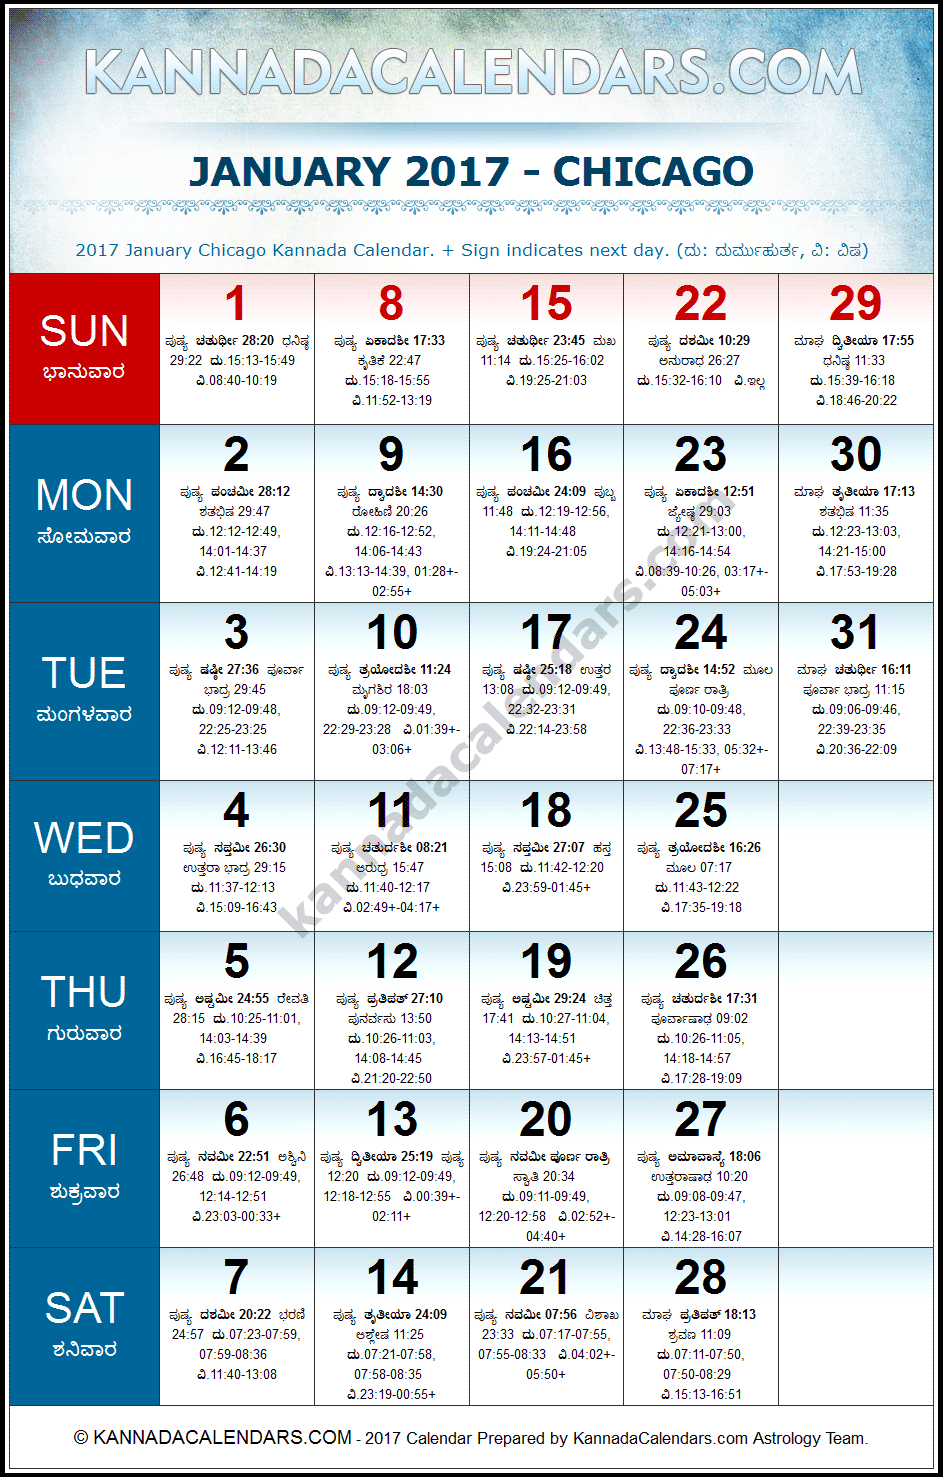 January 2017 Kannada Calendar for Chicago, USA